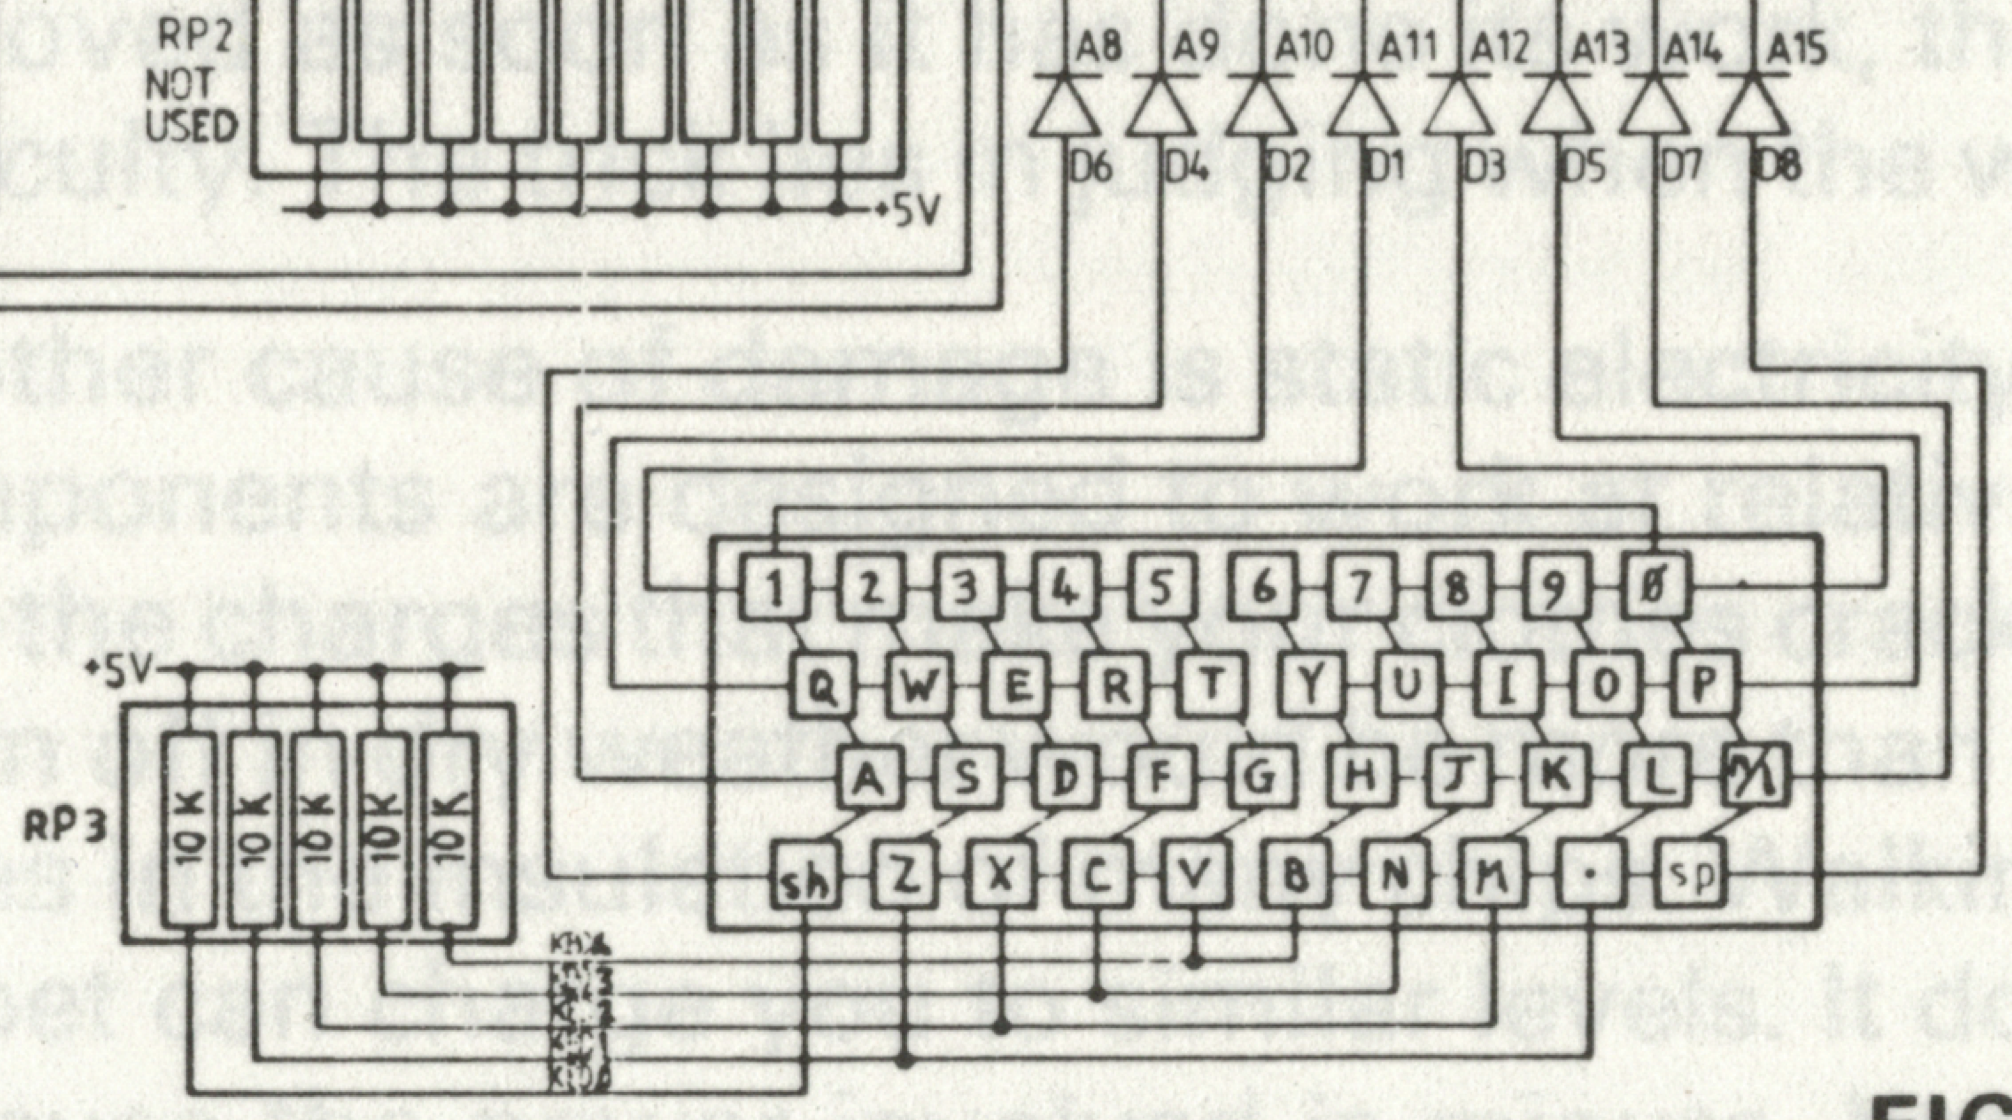 ZX81/TIMEX-SINCLAIR 1000 3D Printed Case - Part 2